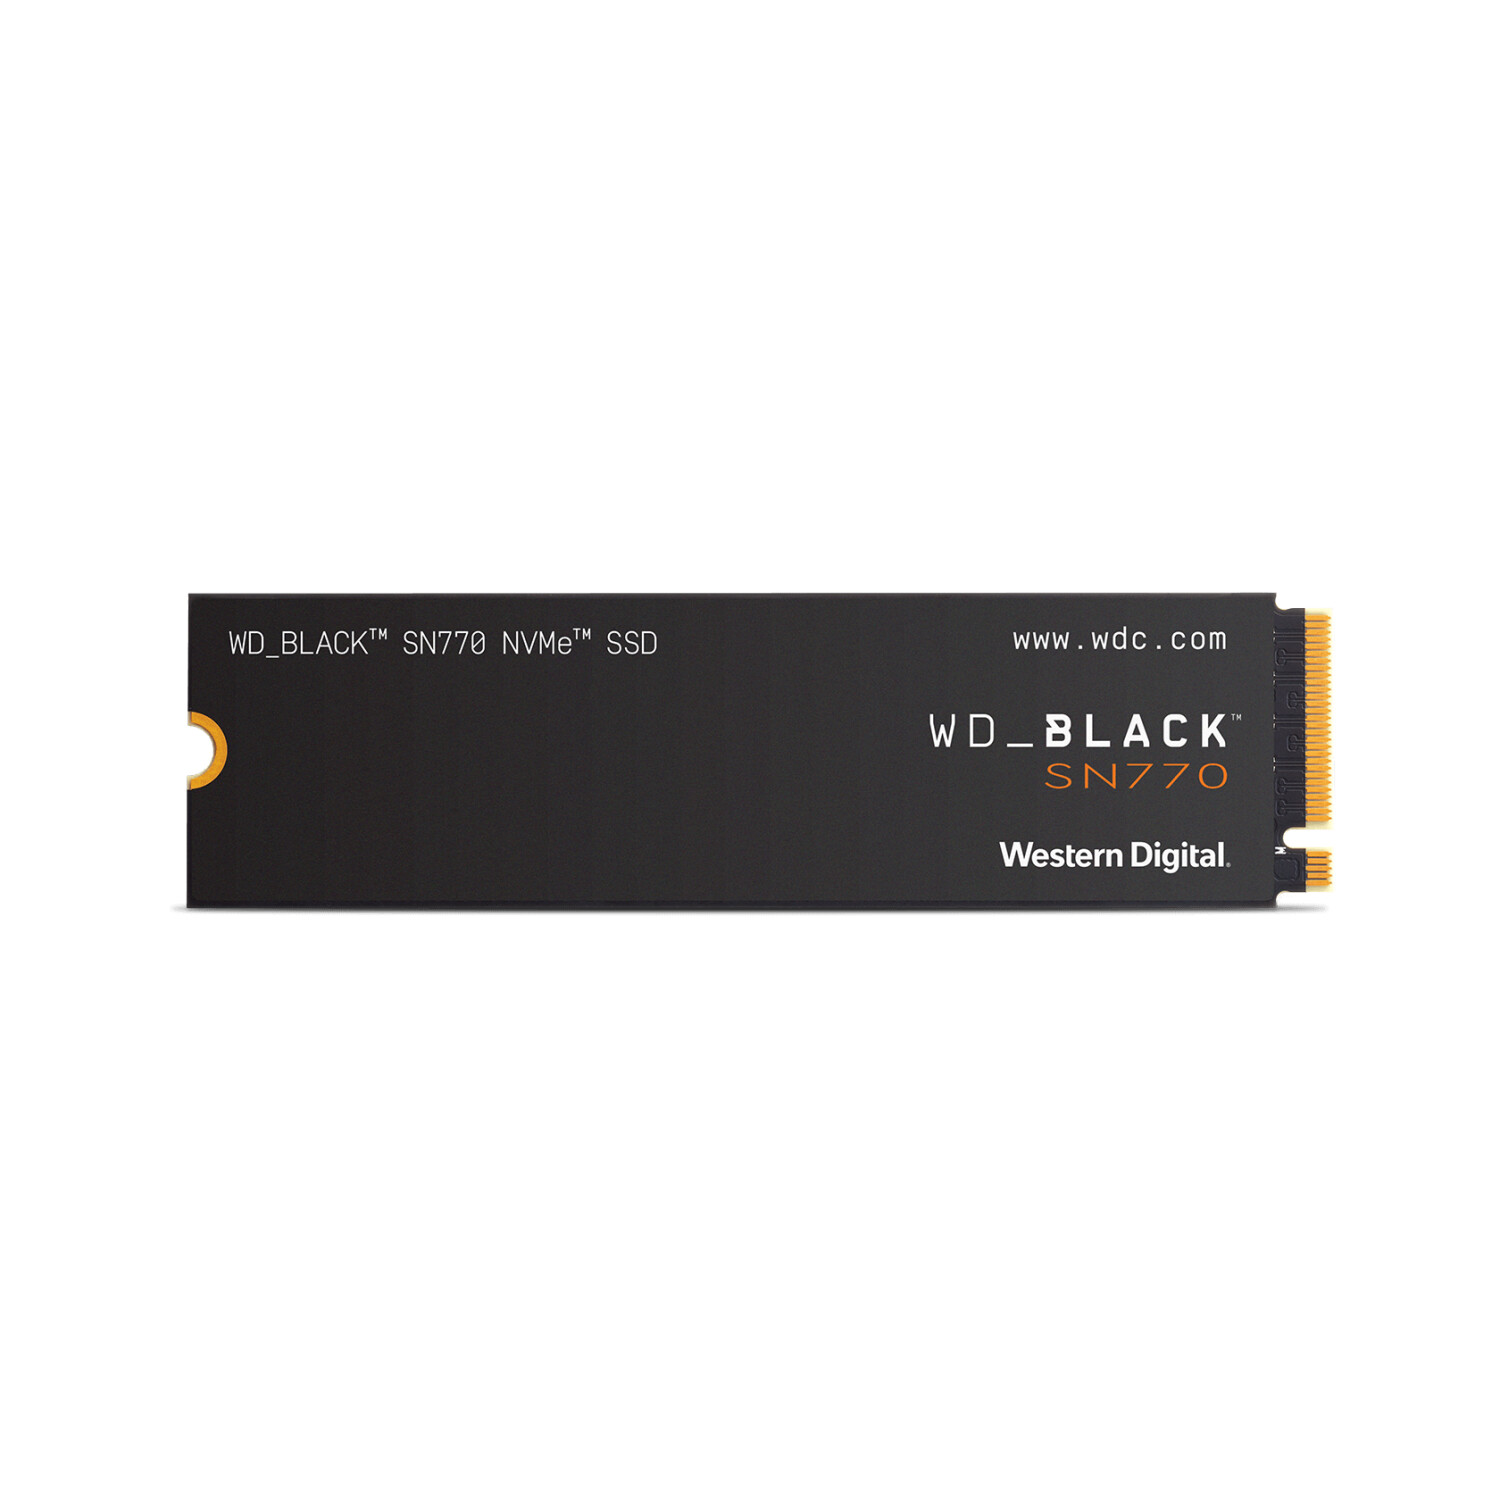 WD Black SN770 Review: Affordable Gen 4 SSD - Tech Advisor